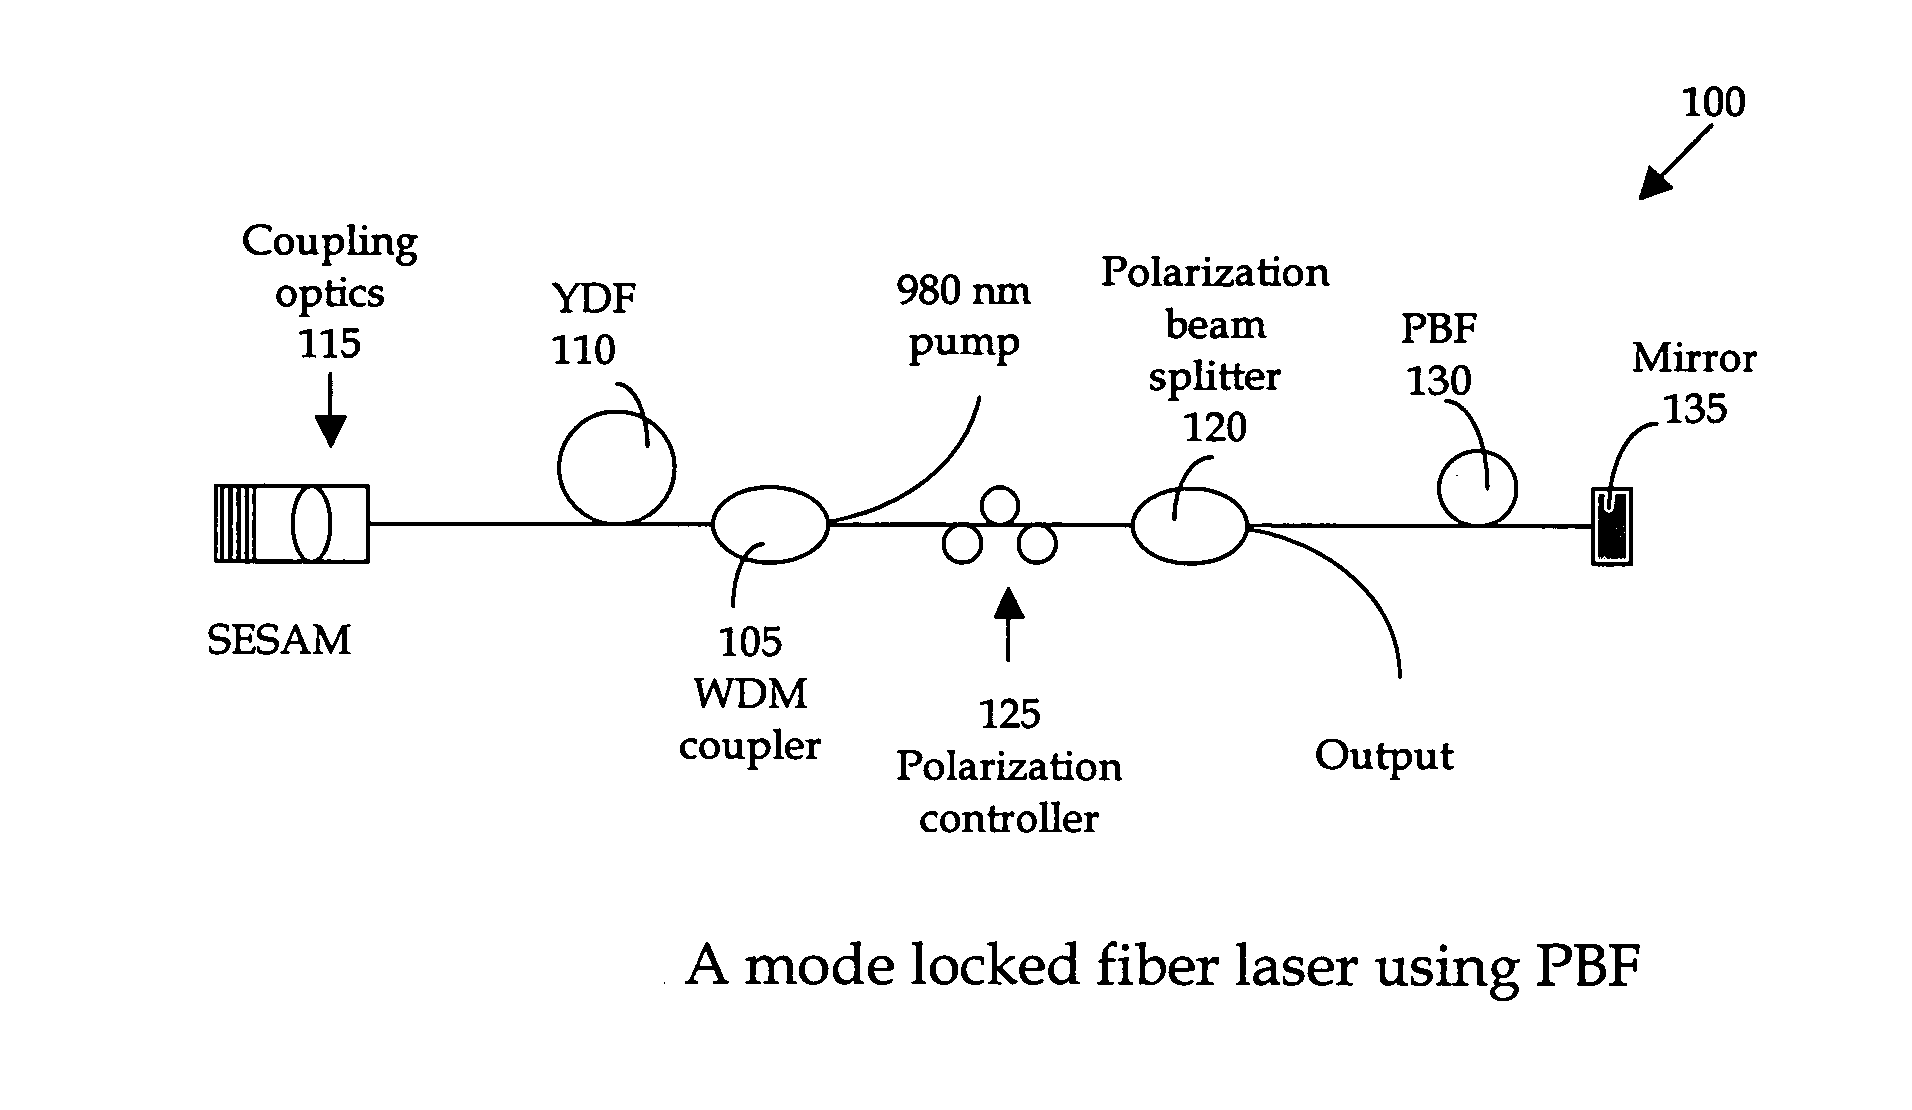 Photonic band-gap fiber based mode locked fiber laser at one micron